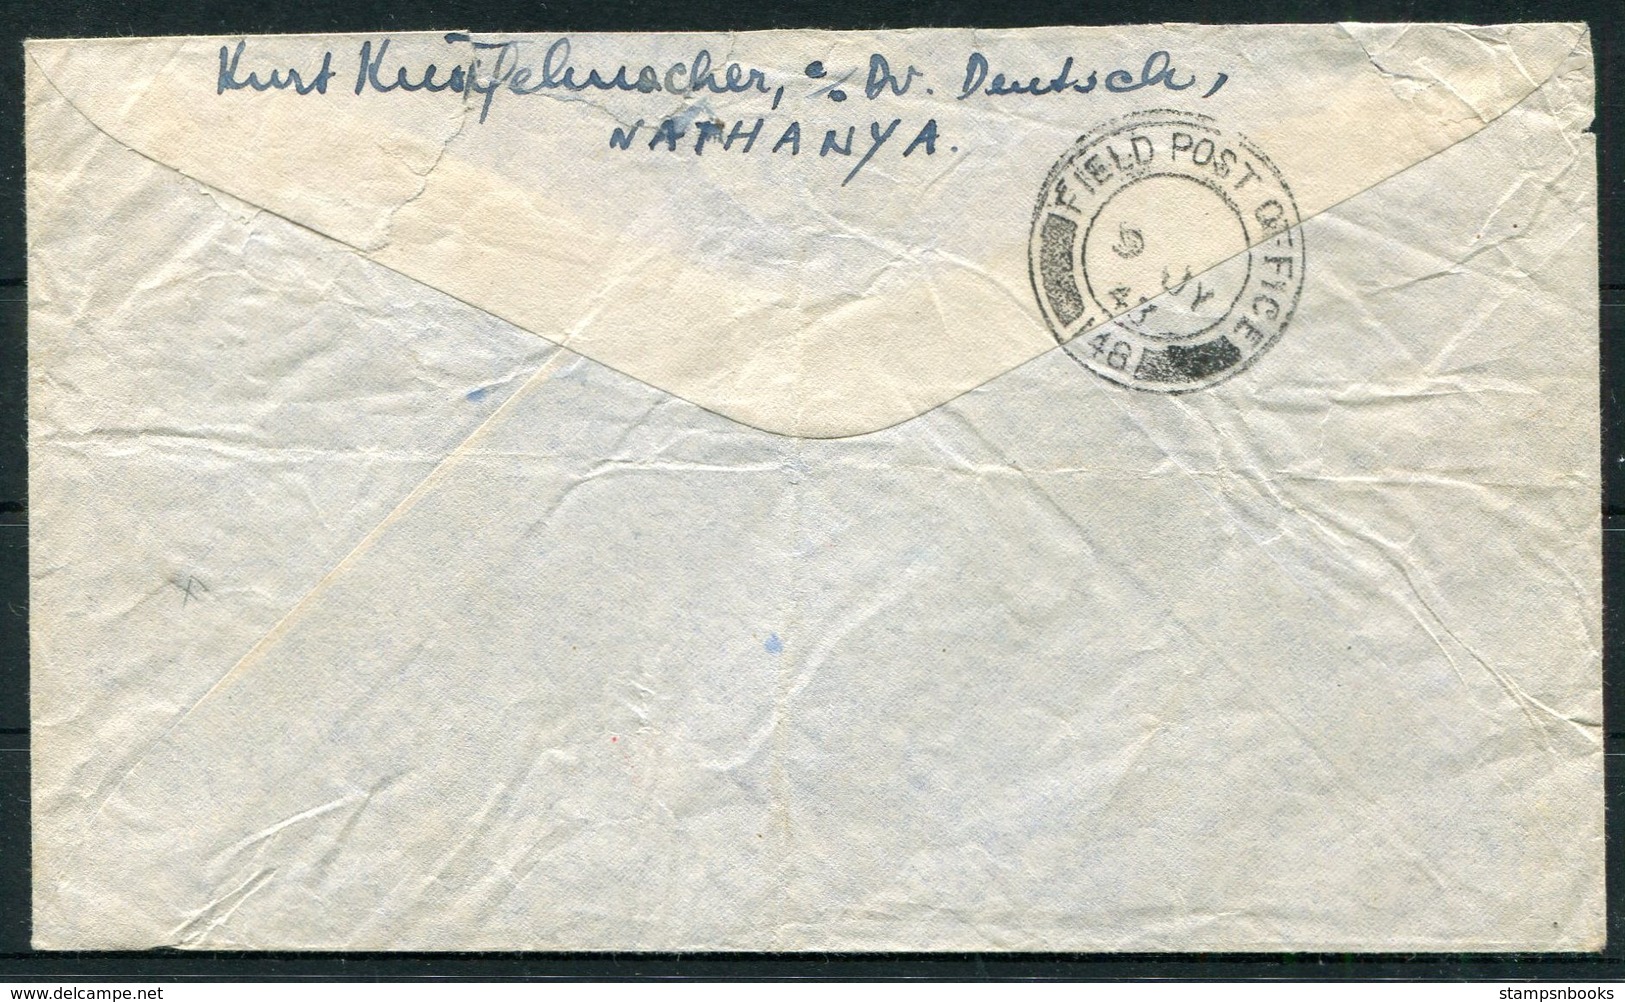 1943 Palestine CENSOR Field Post Office 148 FPO Cover Nathanya - Lt Deutsche R.A.M.C. 29B General Hospital - Palestine